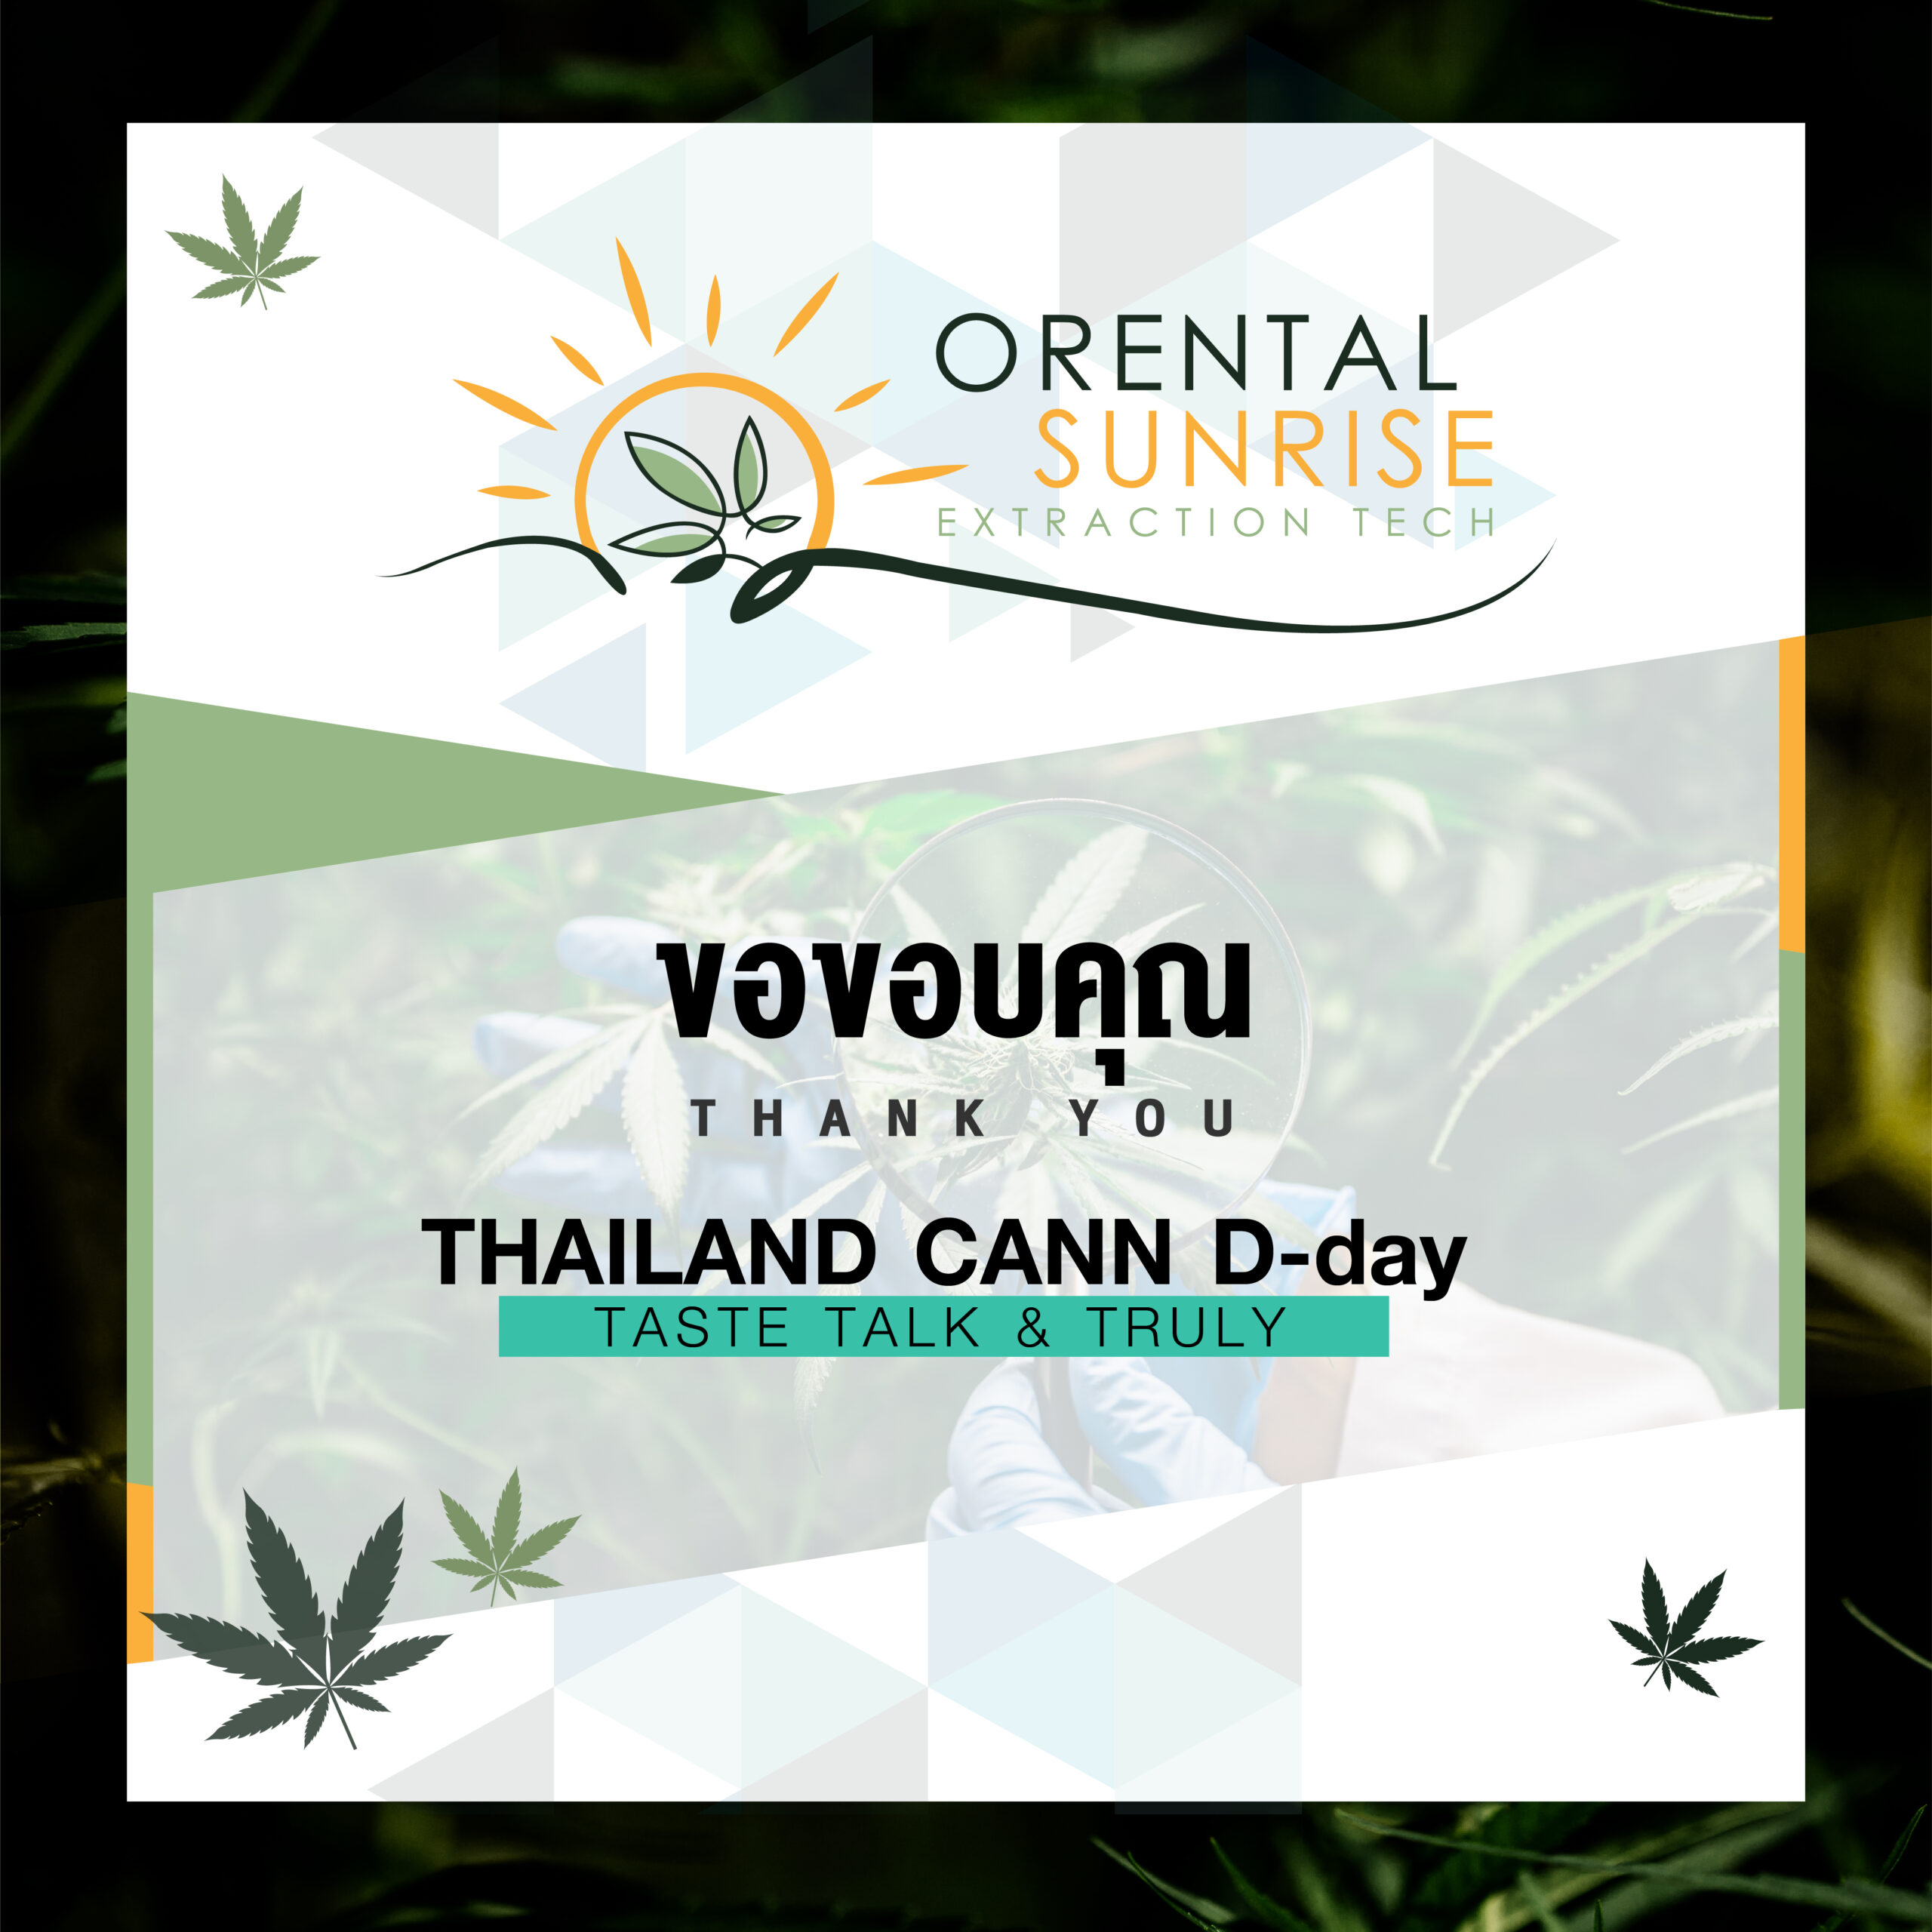 ORENTAL SUNRISE at THAILAND CANN D-DAY event {17-21 Nov 2021}